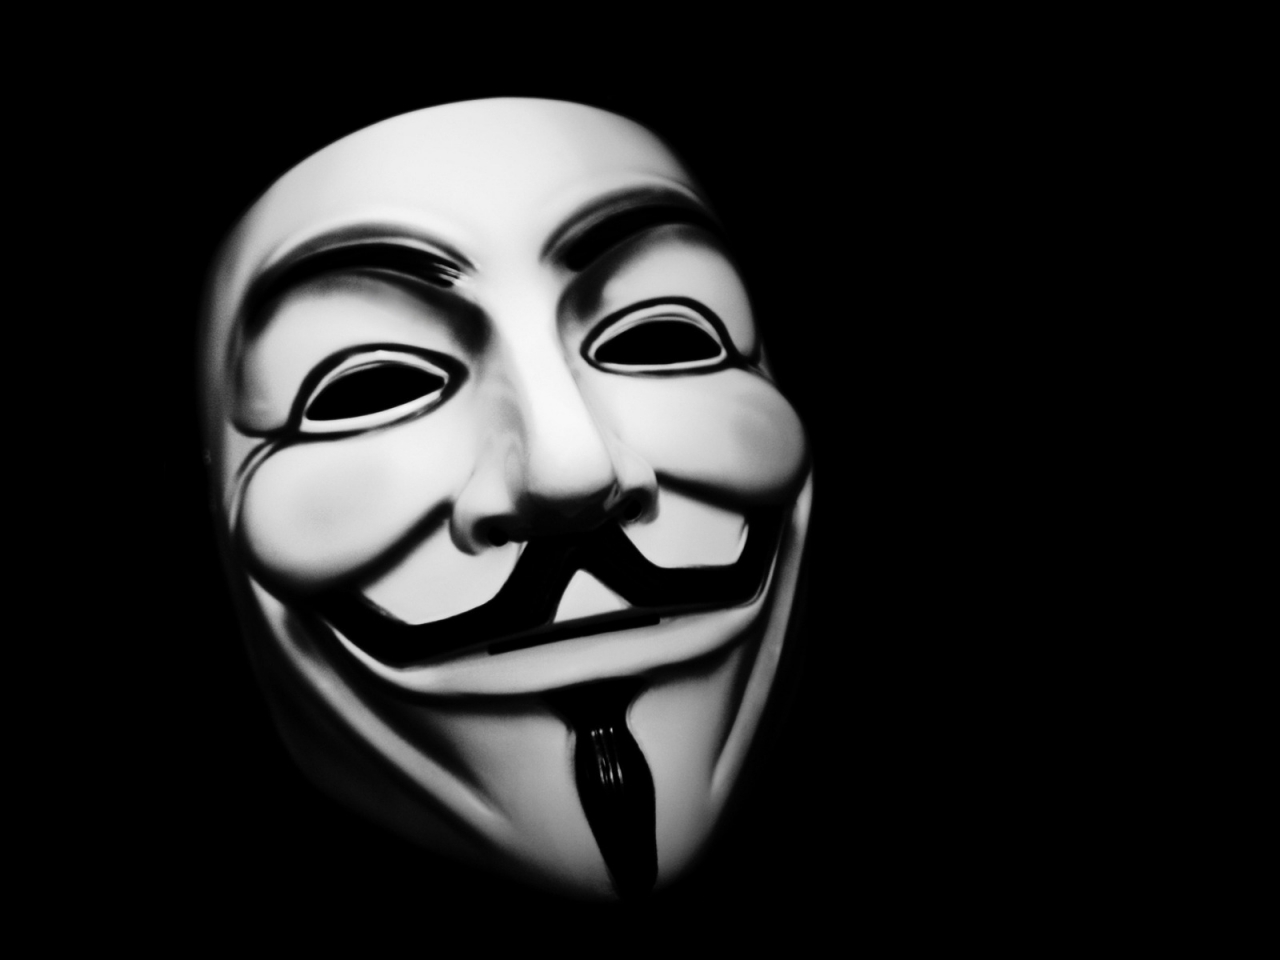 Vendetta Mask for 1280 x 960 resolution